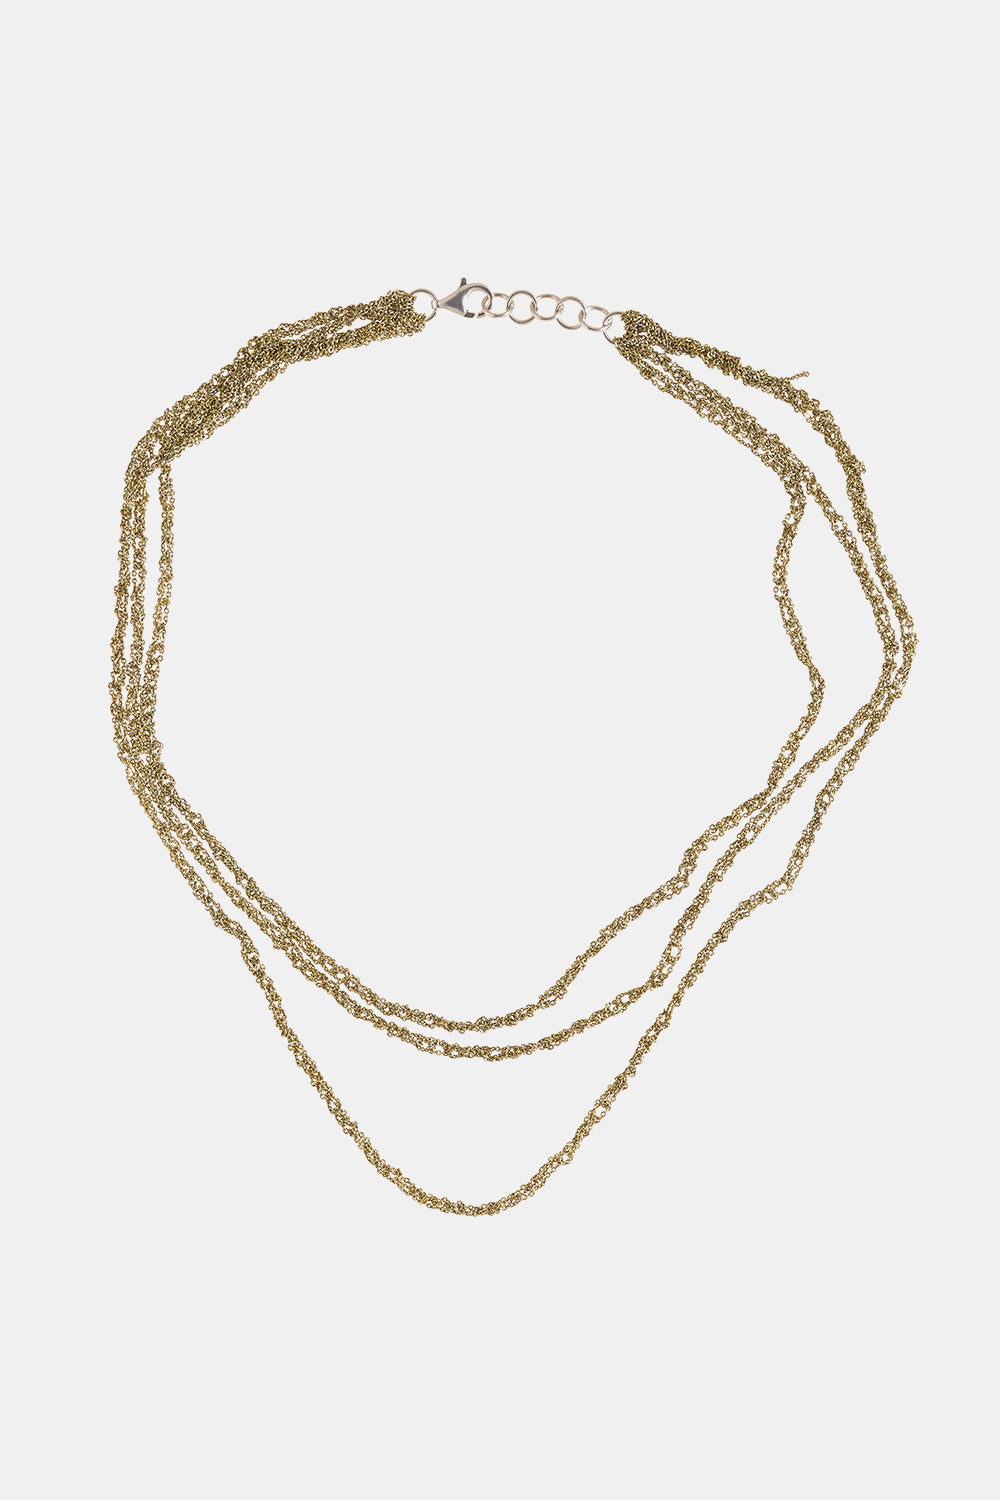 Arielle De Pinto 3-Tiered Simple Necklace in Haze